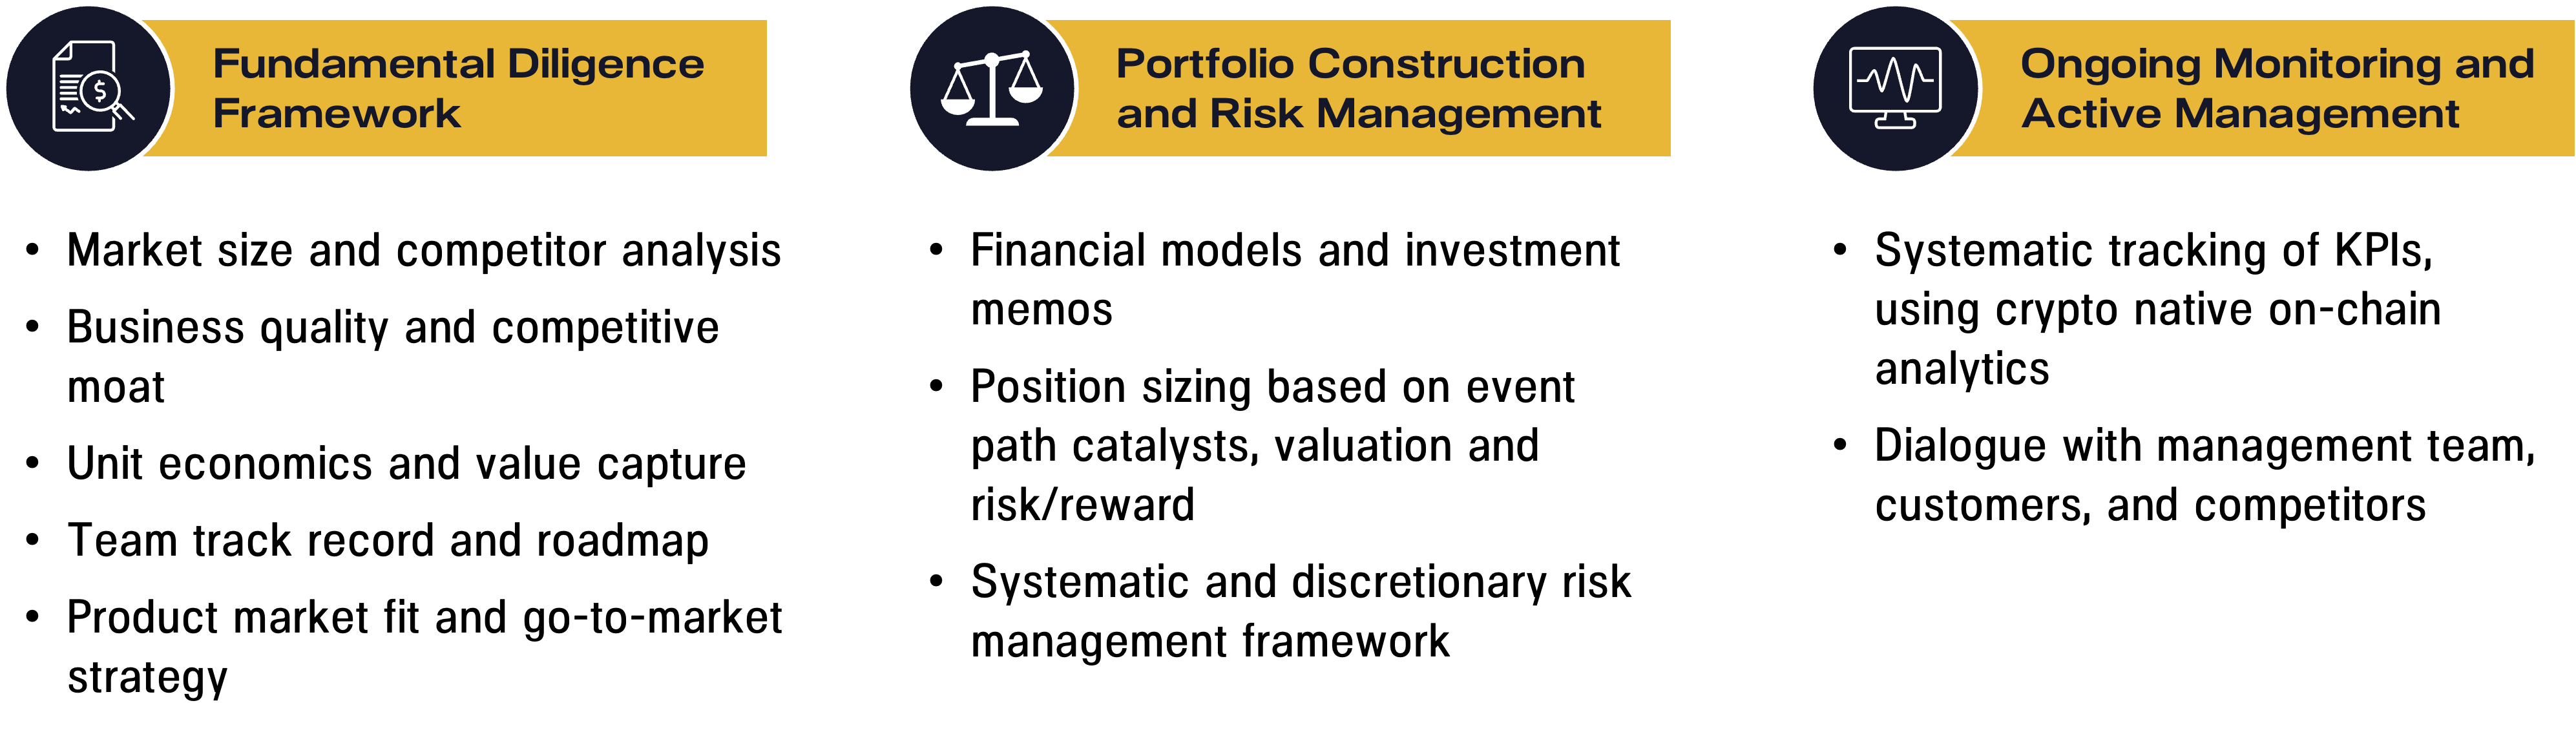 Portfolio Construction Fundamentals